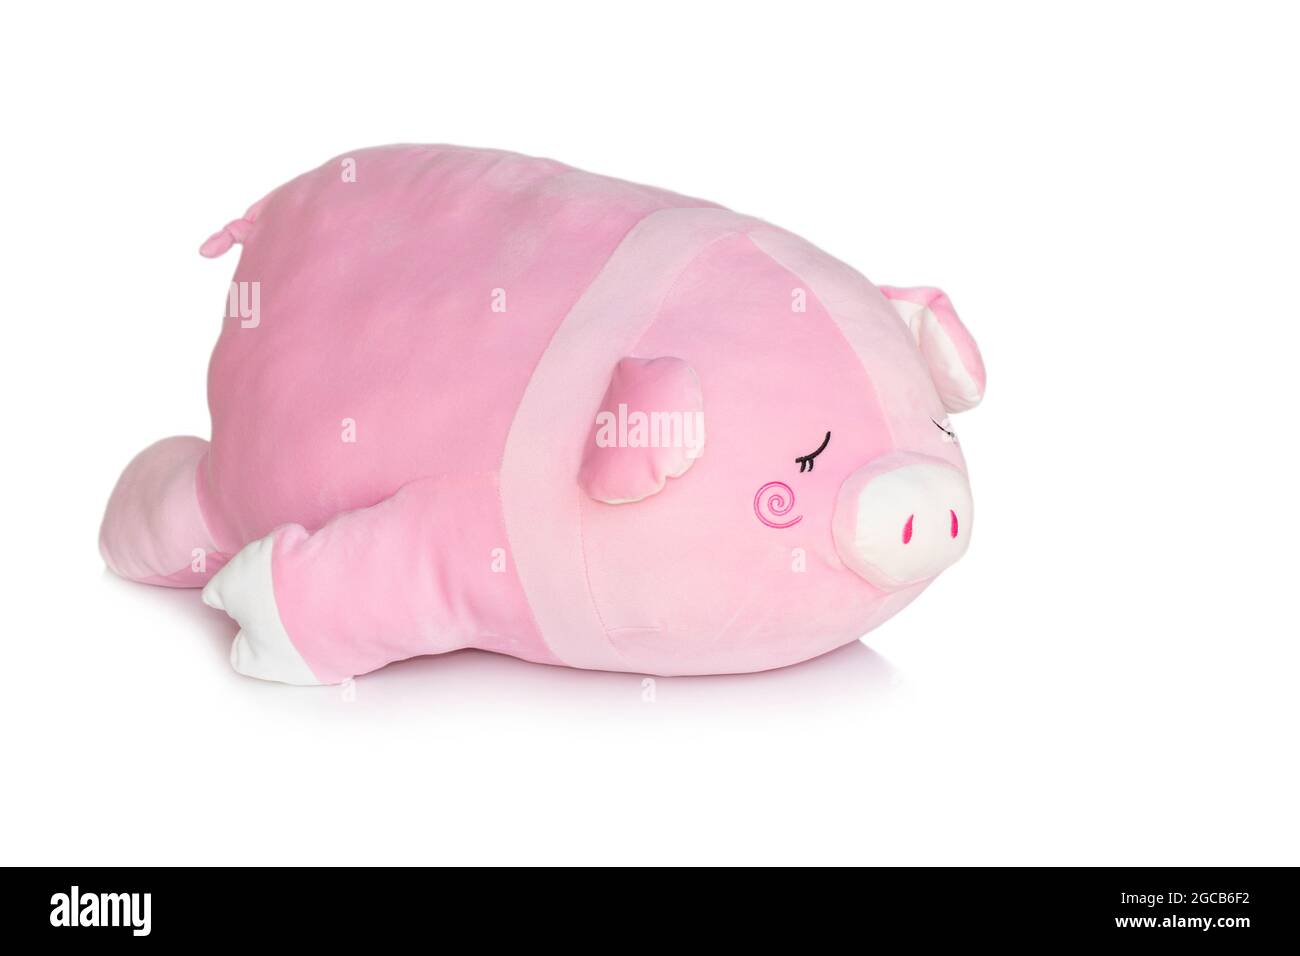 Image of pink pig doll isolated on white background. Animal dolls. Stock Photo